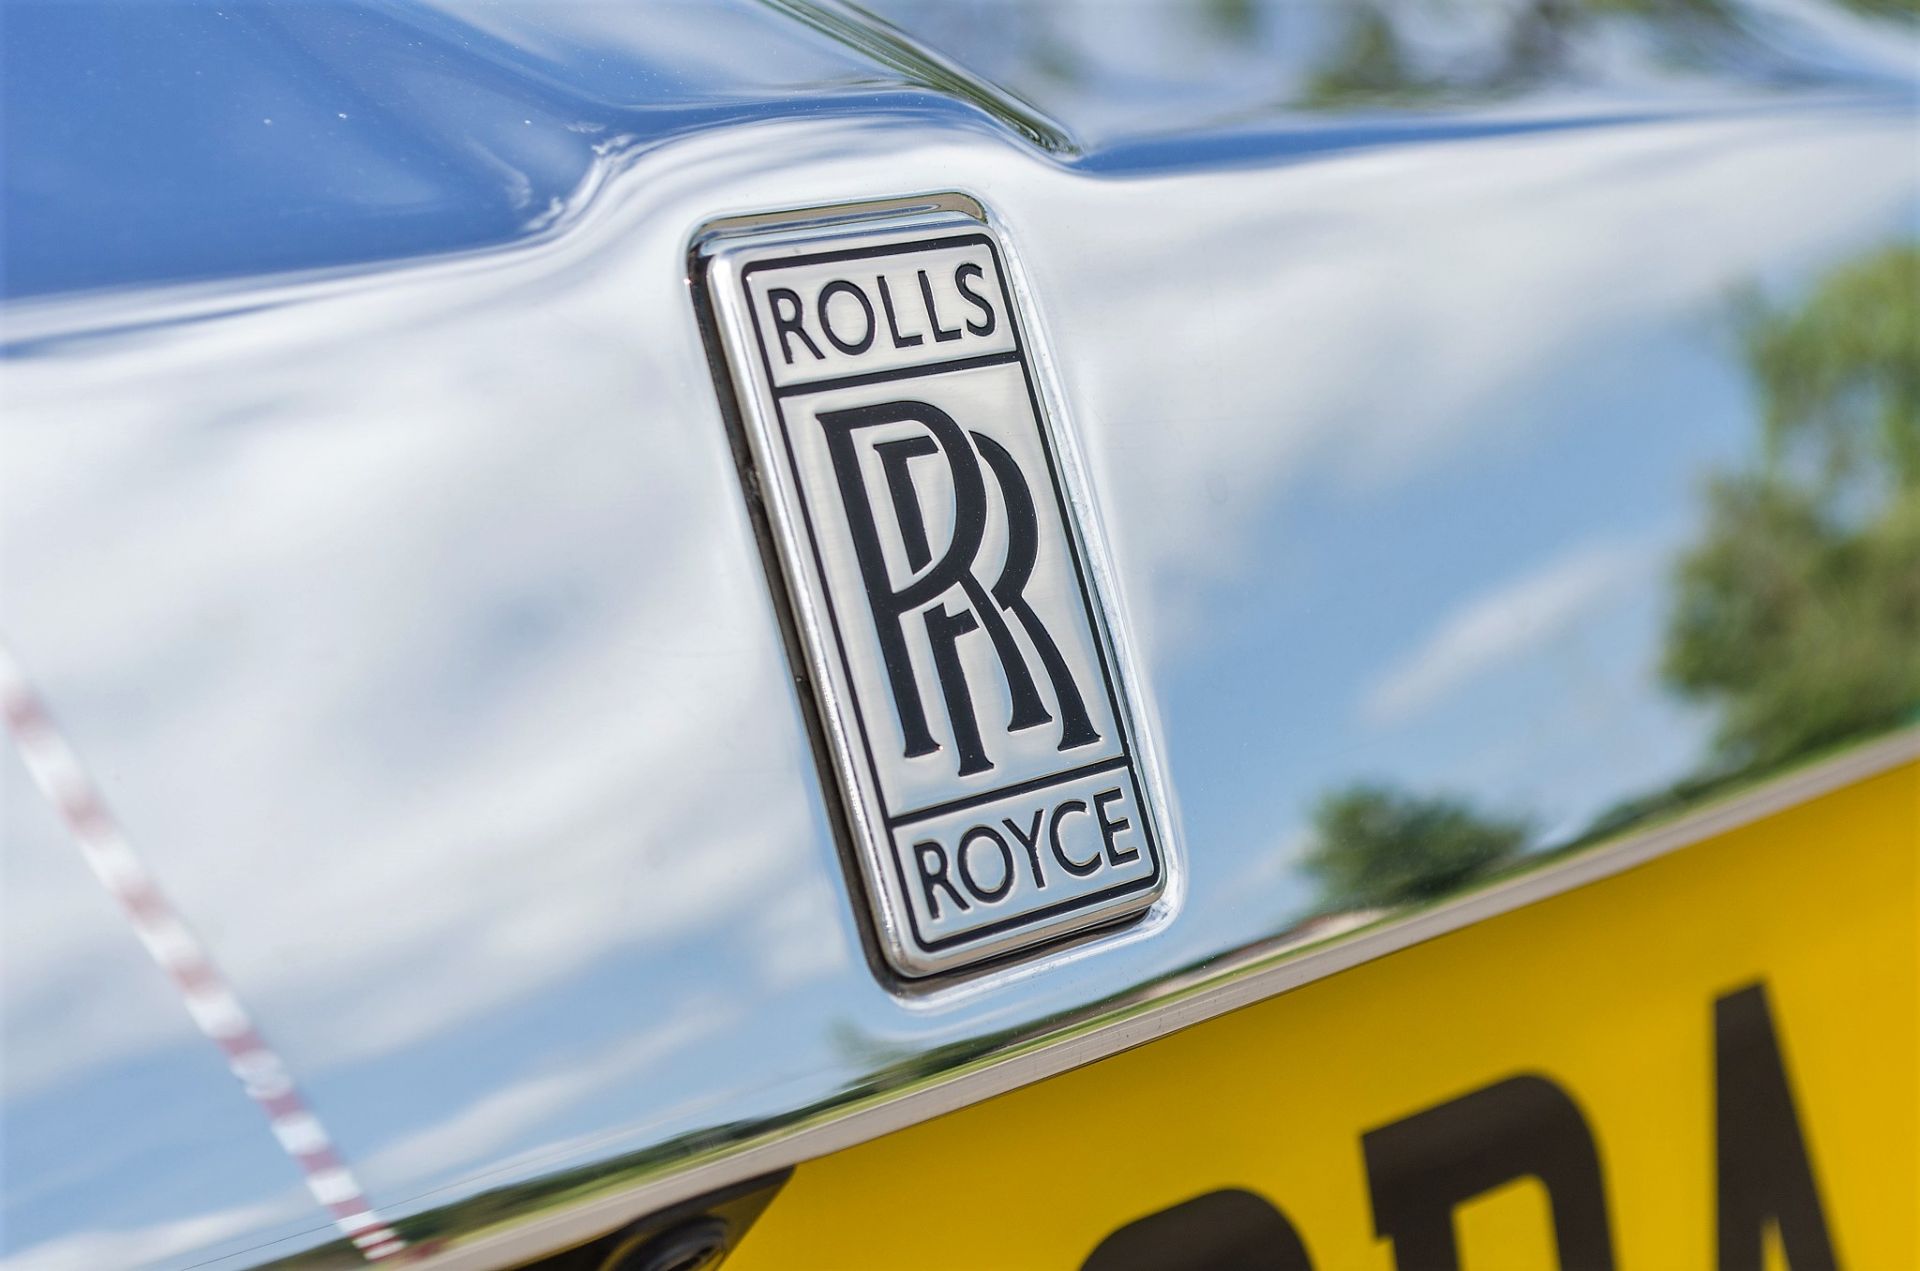 Rolls Royce Phantom VII 6.75 litre petrol 4 door saloon car  Reg No: LT 08 ODA Date of Registration: - Image 28 of 44